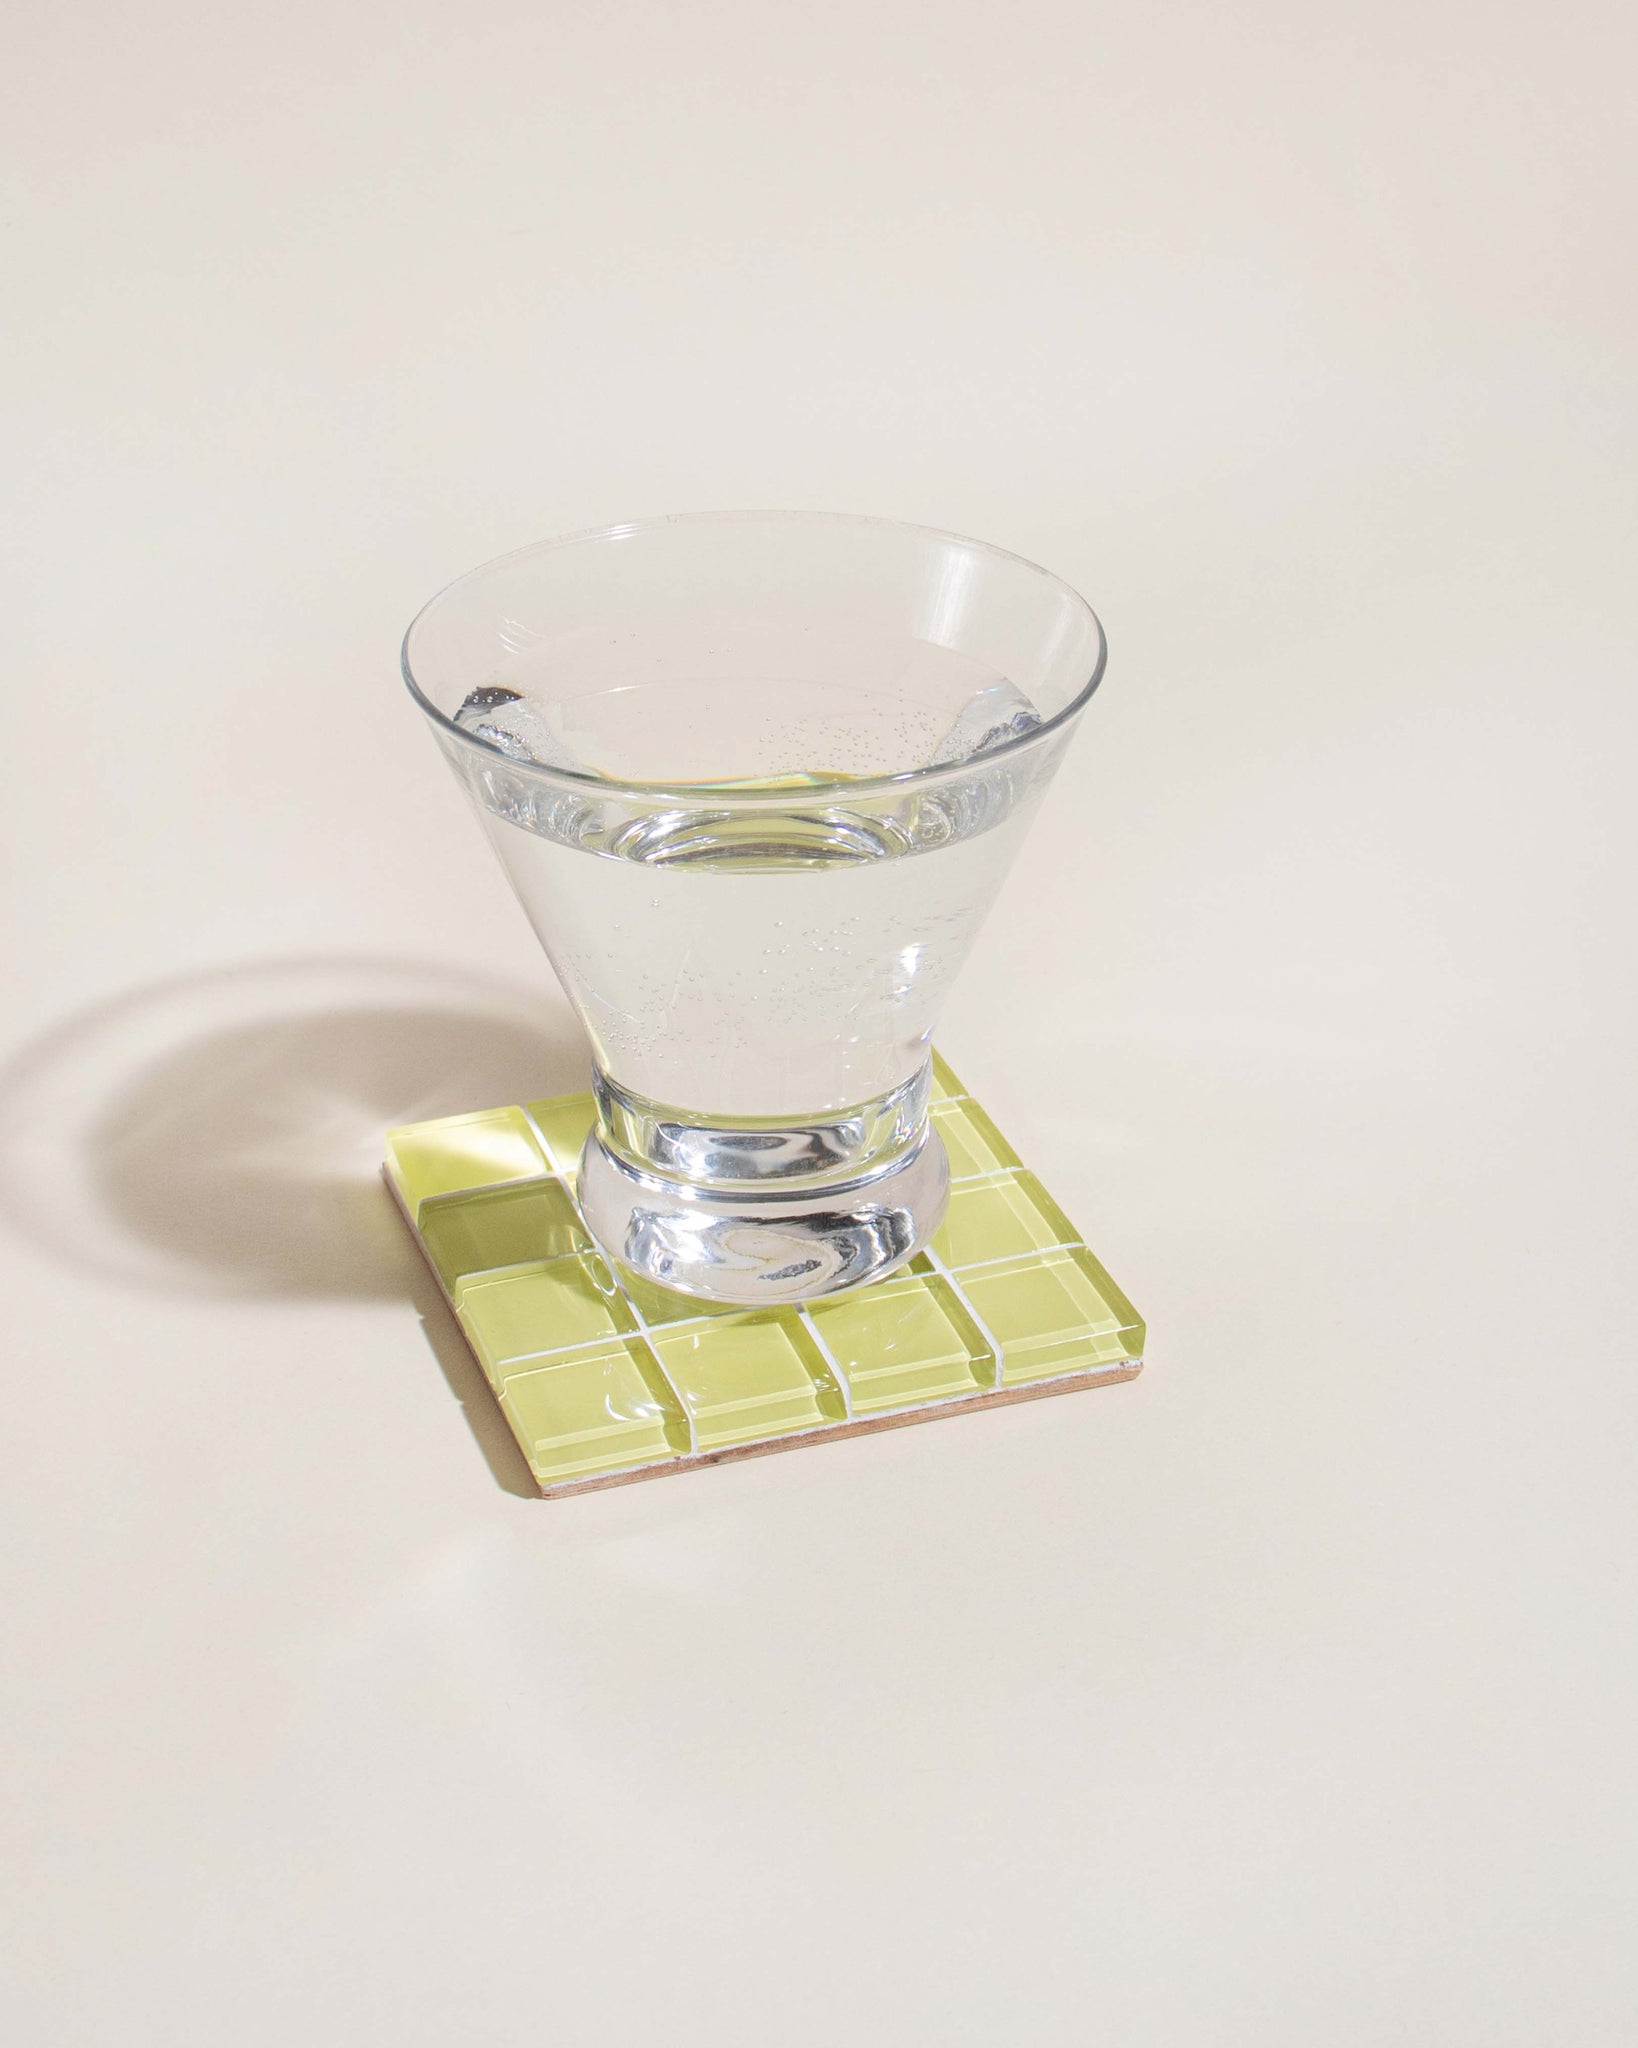 GLASS TILE COASTER - It's Lemon